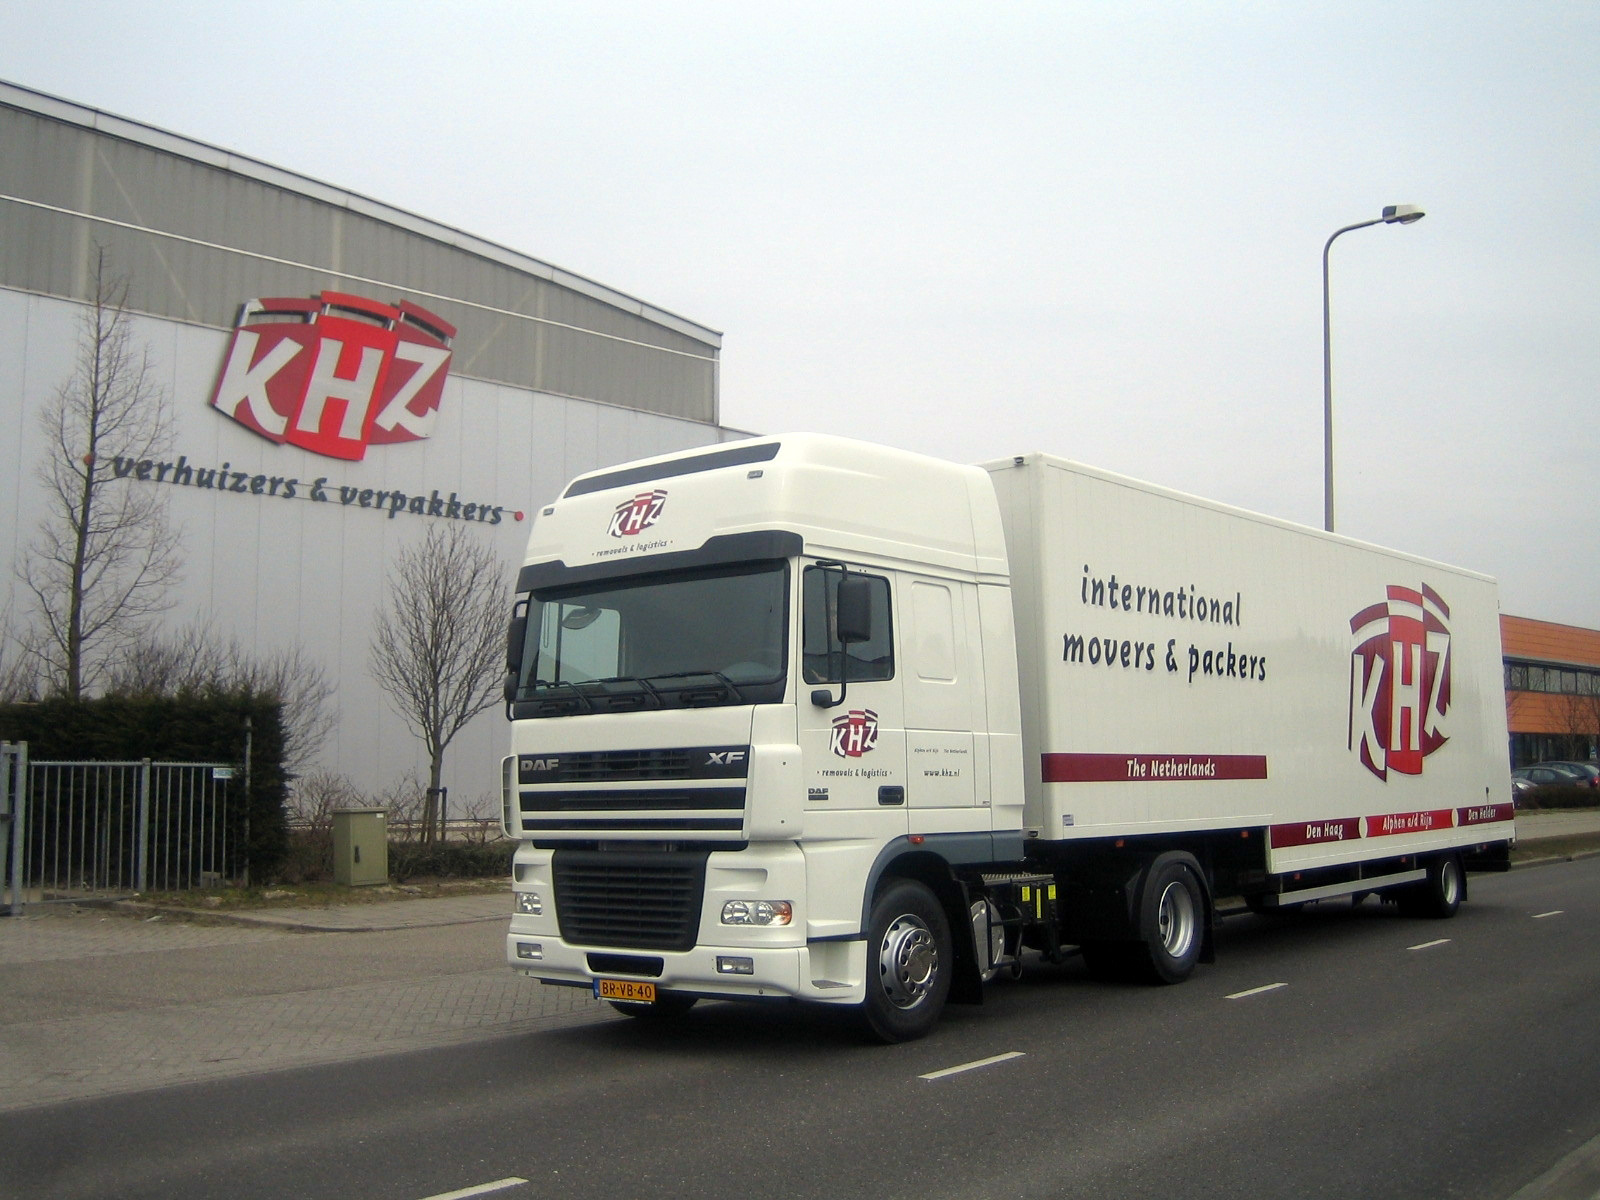 Khz international movers